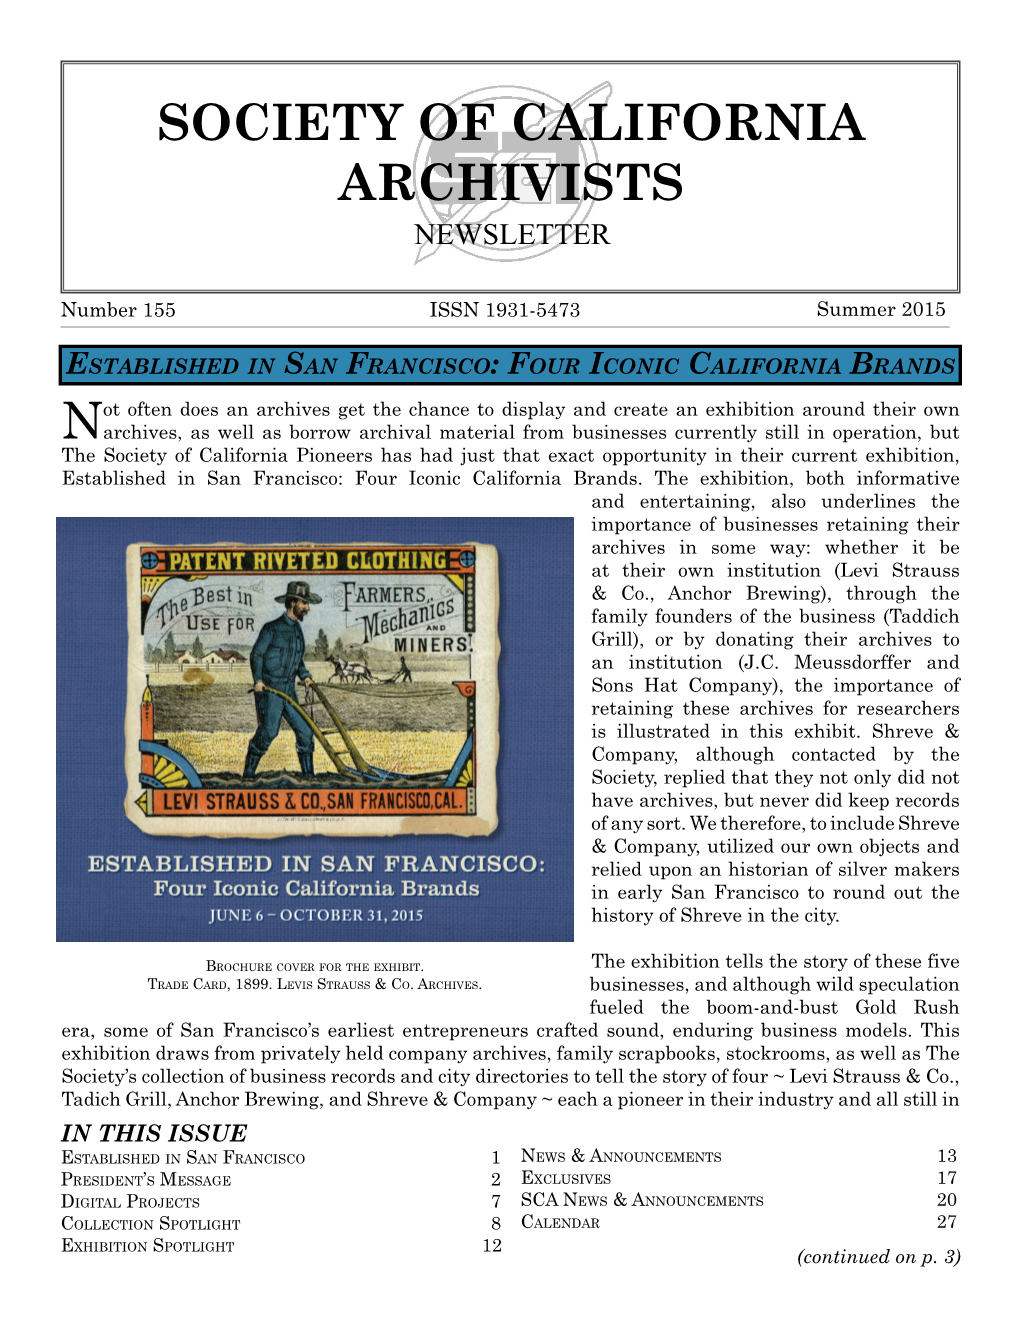 The Society of California Archivists, Inc